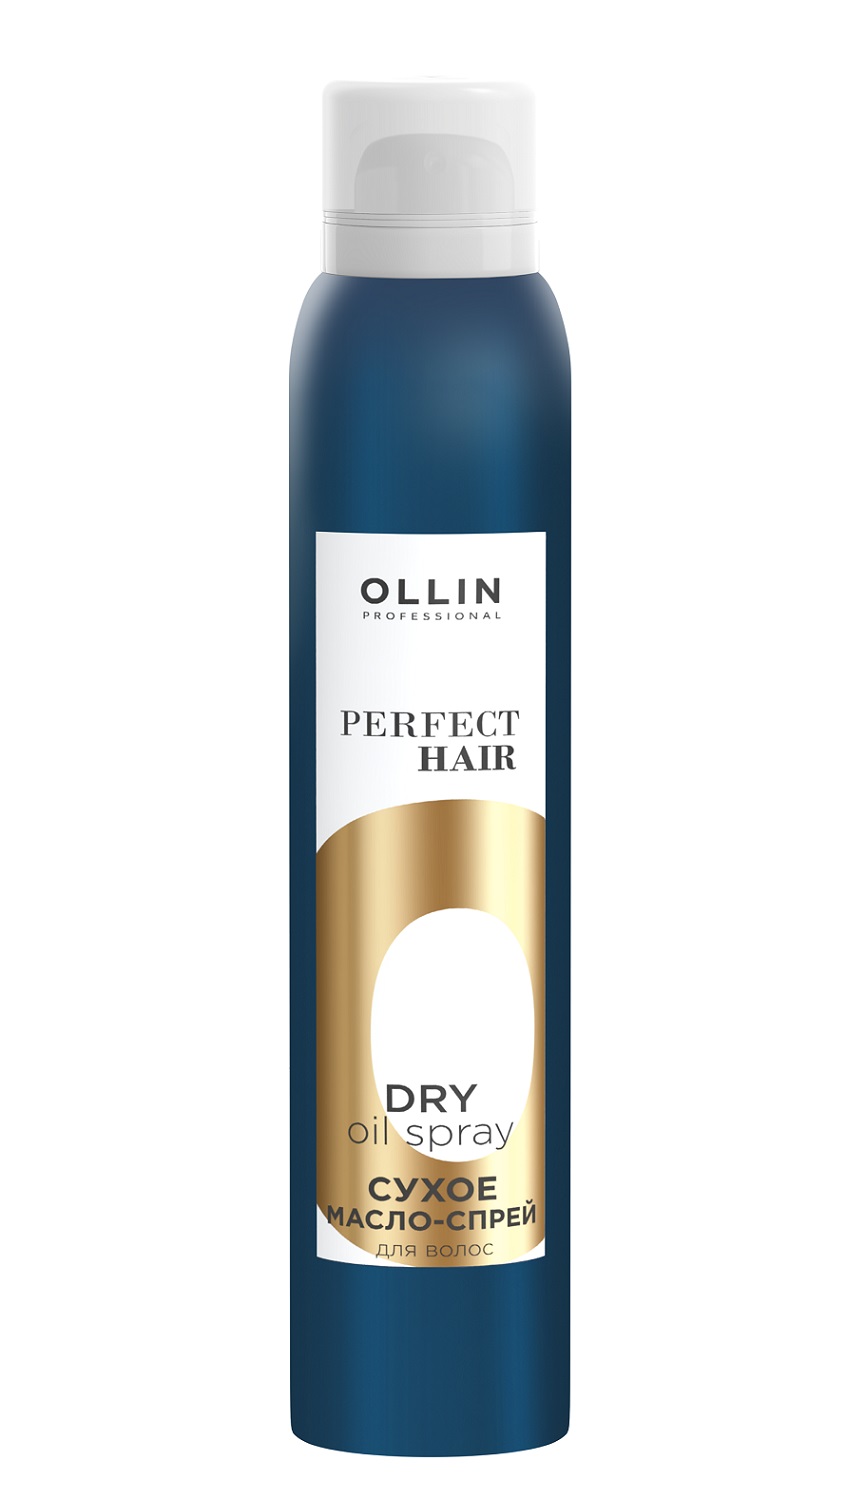 Ollin Professional Сухое масло-спрей для волос, 200 мл (Ollin Professional, Уход за волосами)